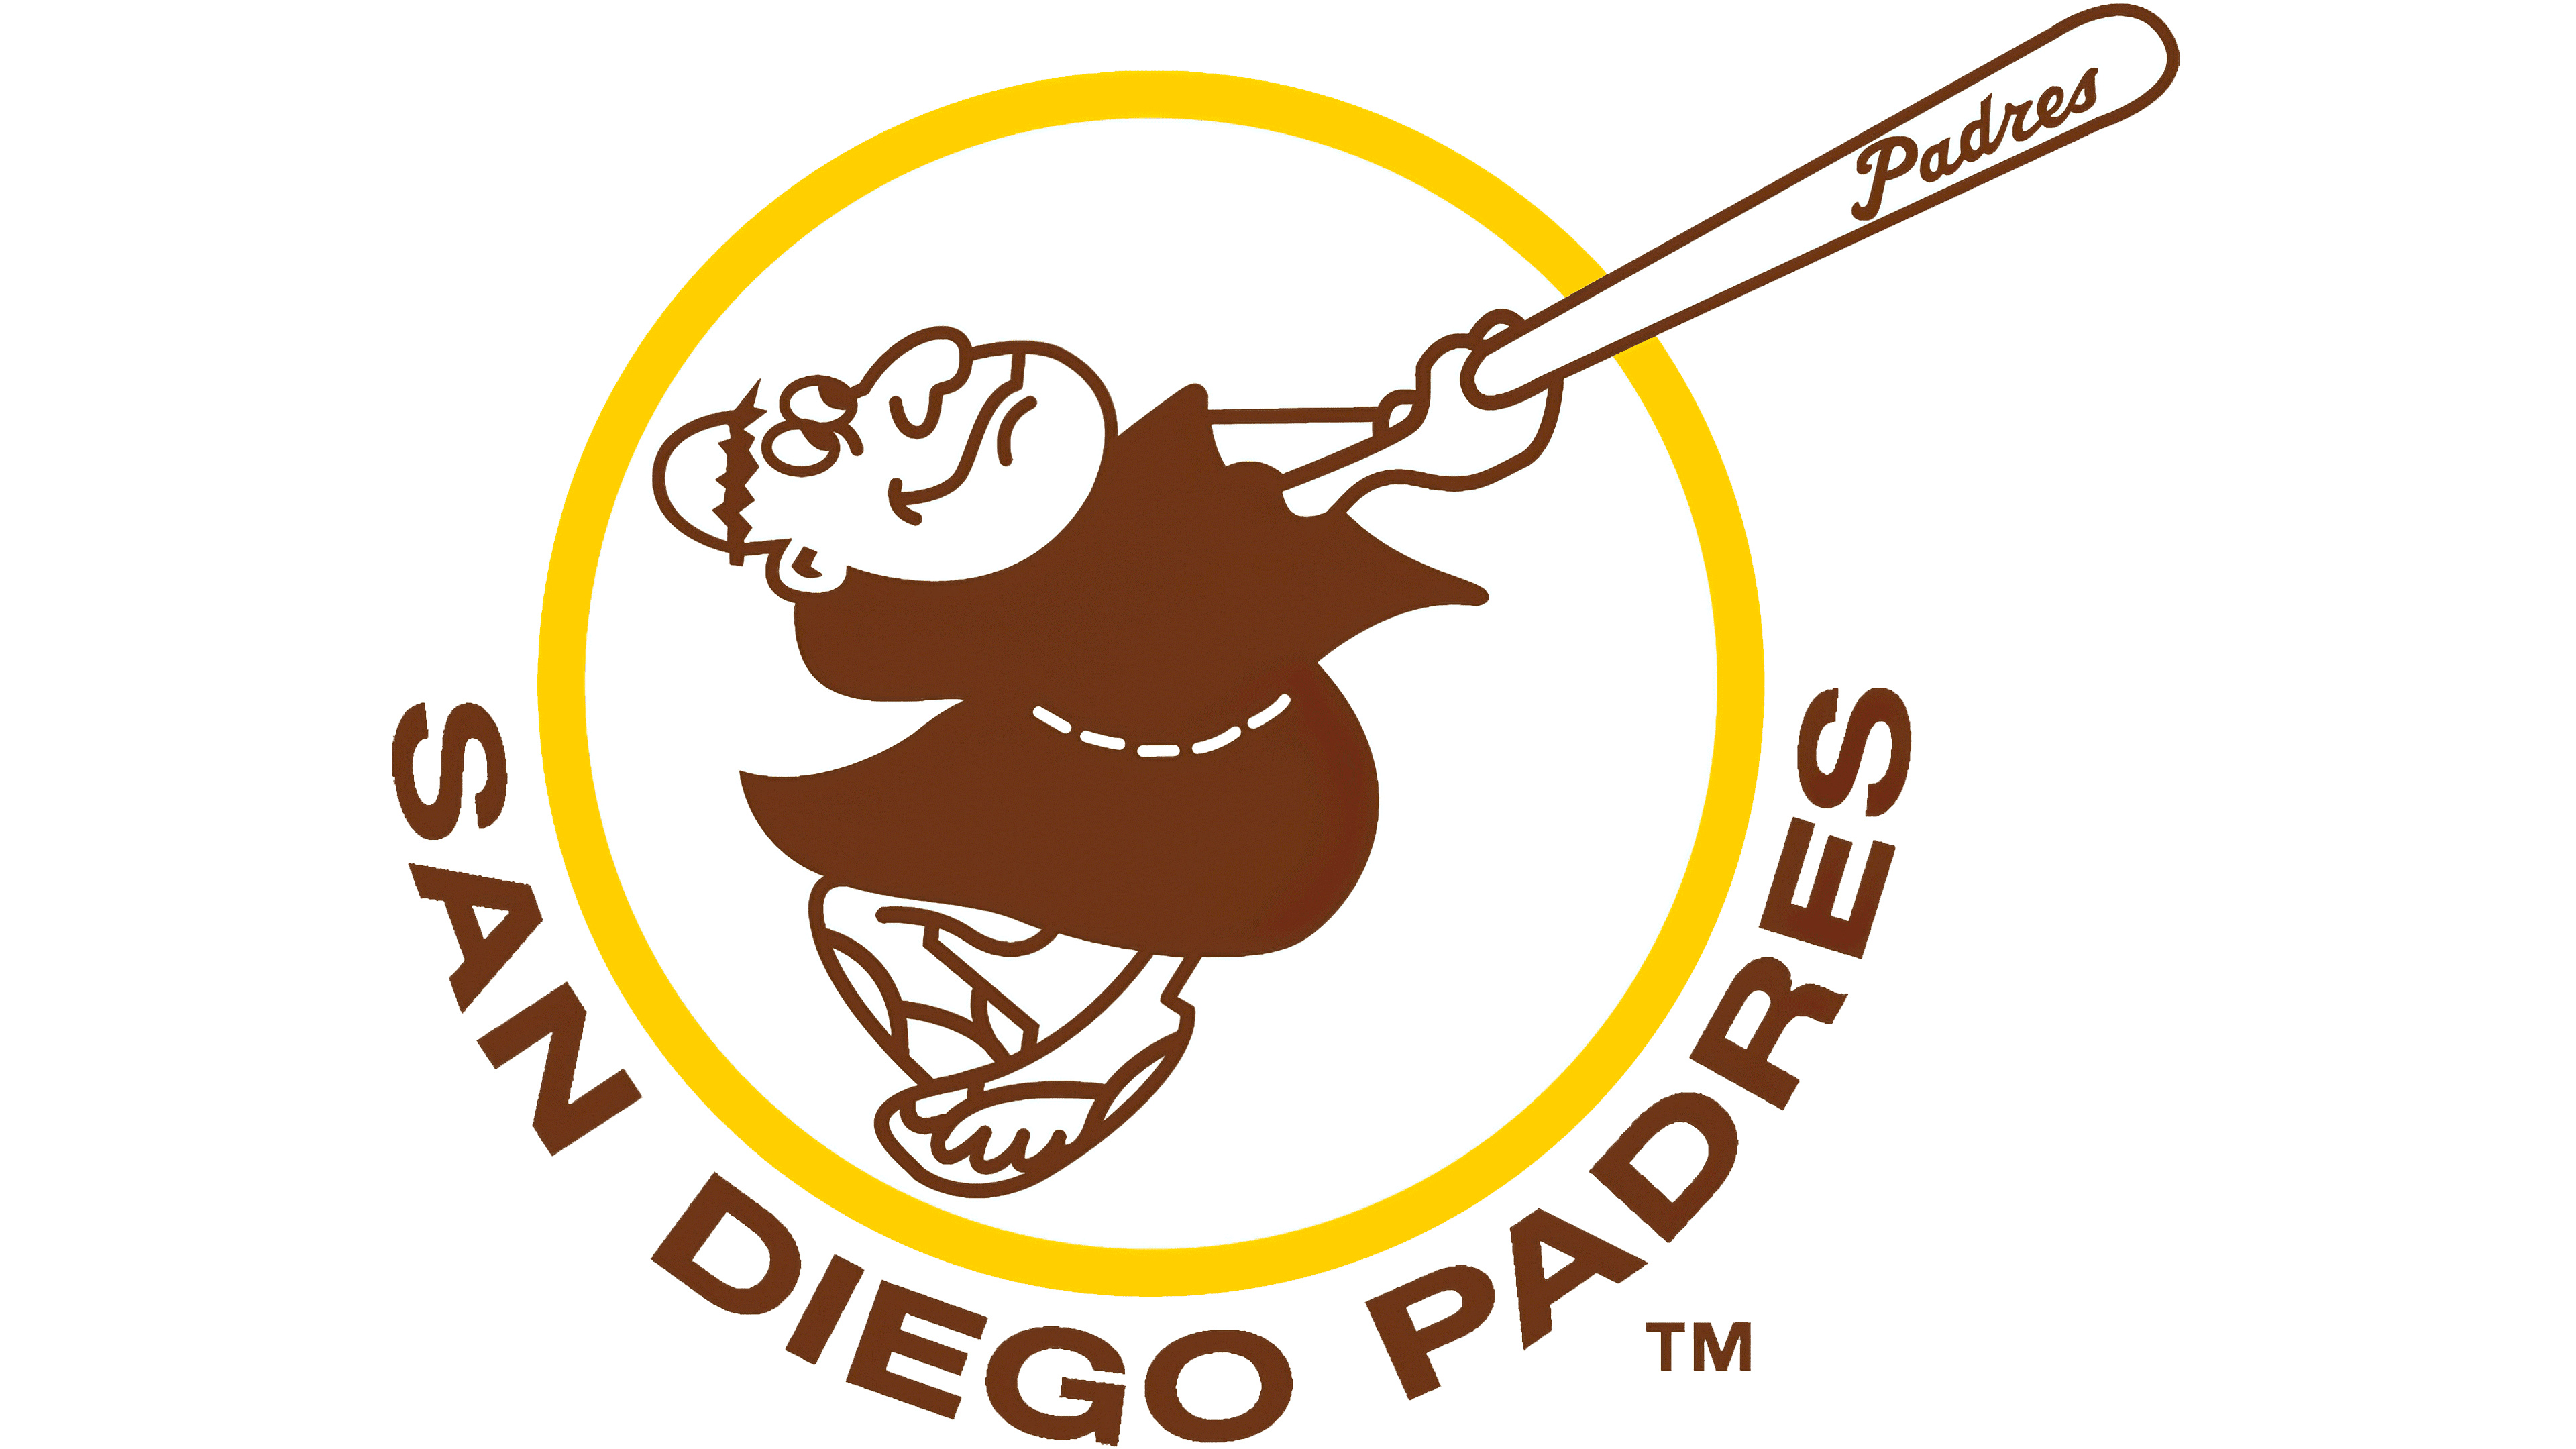 San Diego Padres, Team symbol, Team logo history, Baseball icons, 3840x2160 4K Desktop